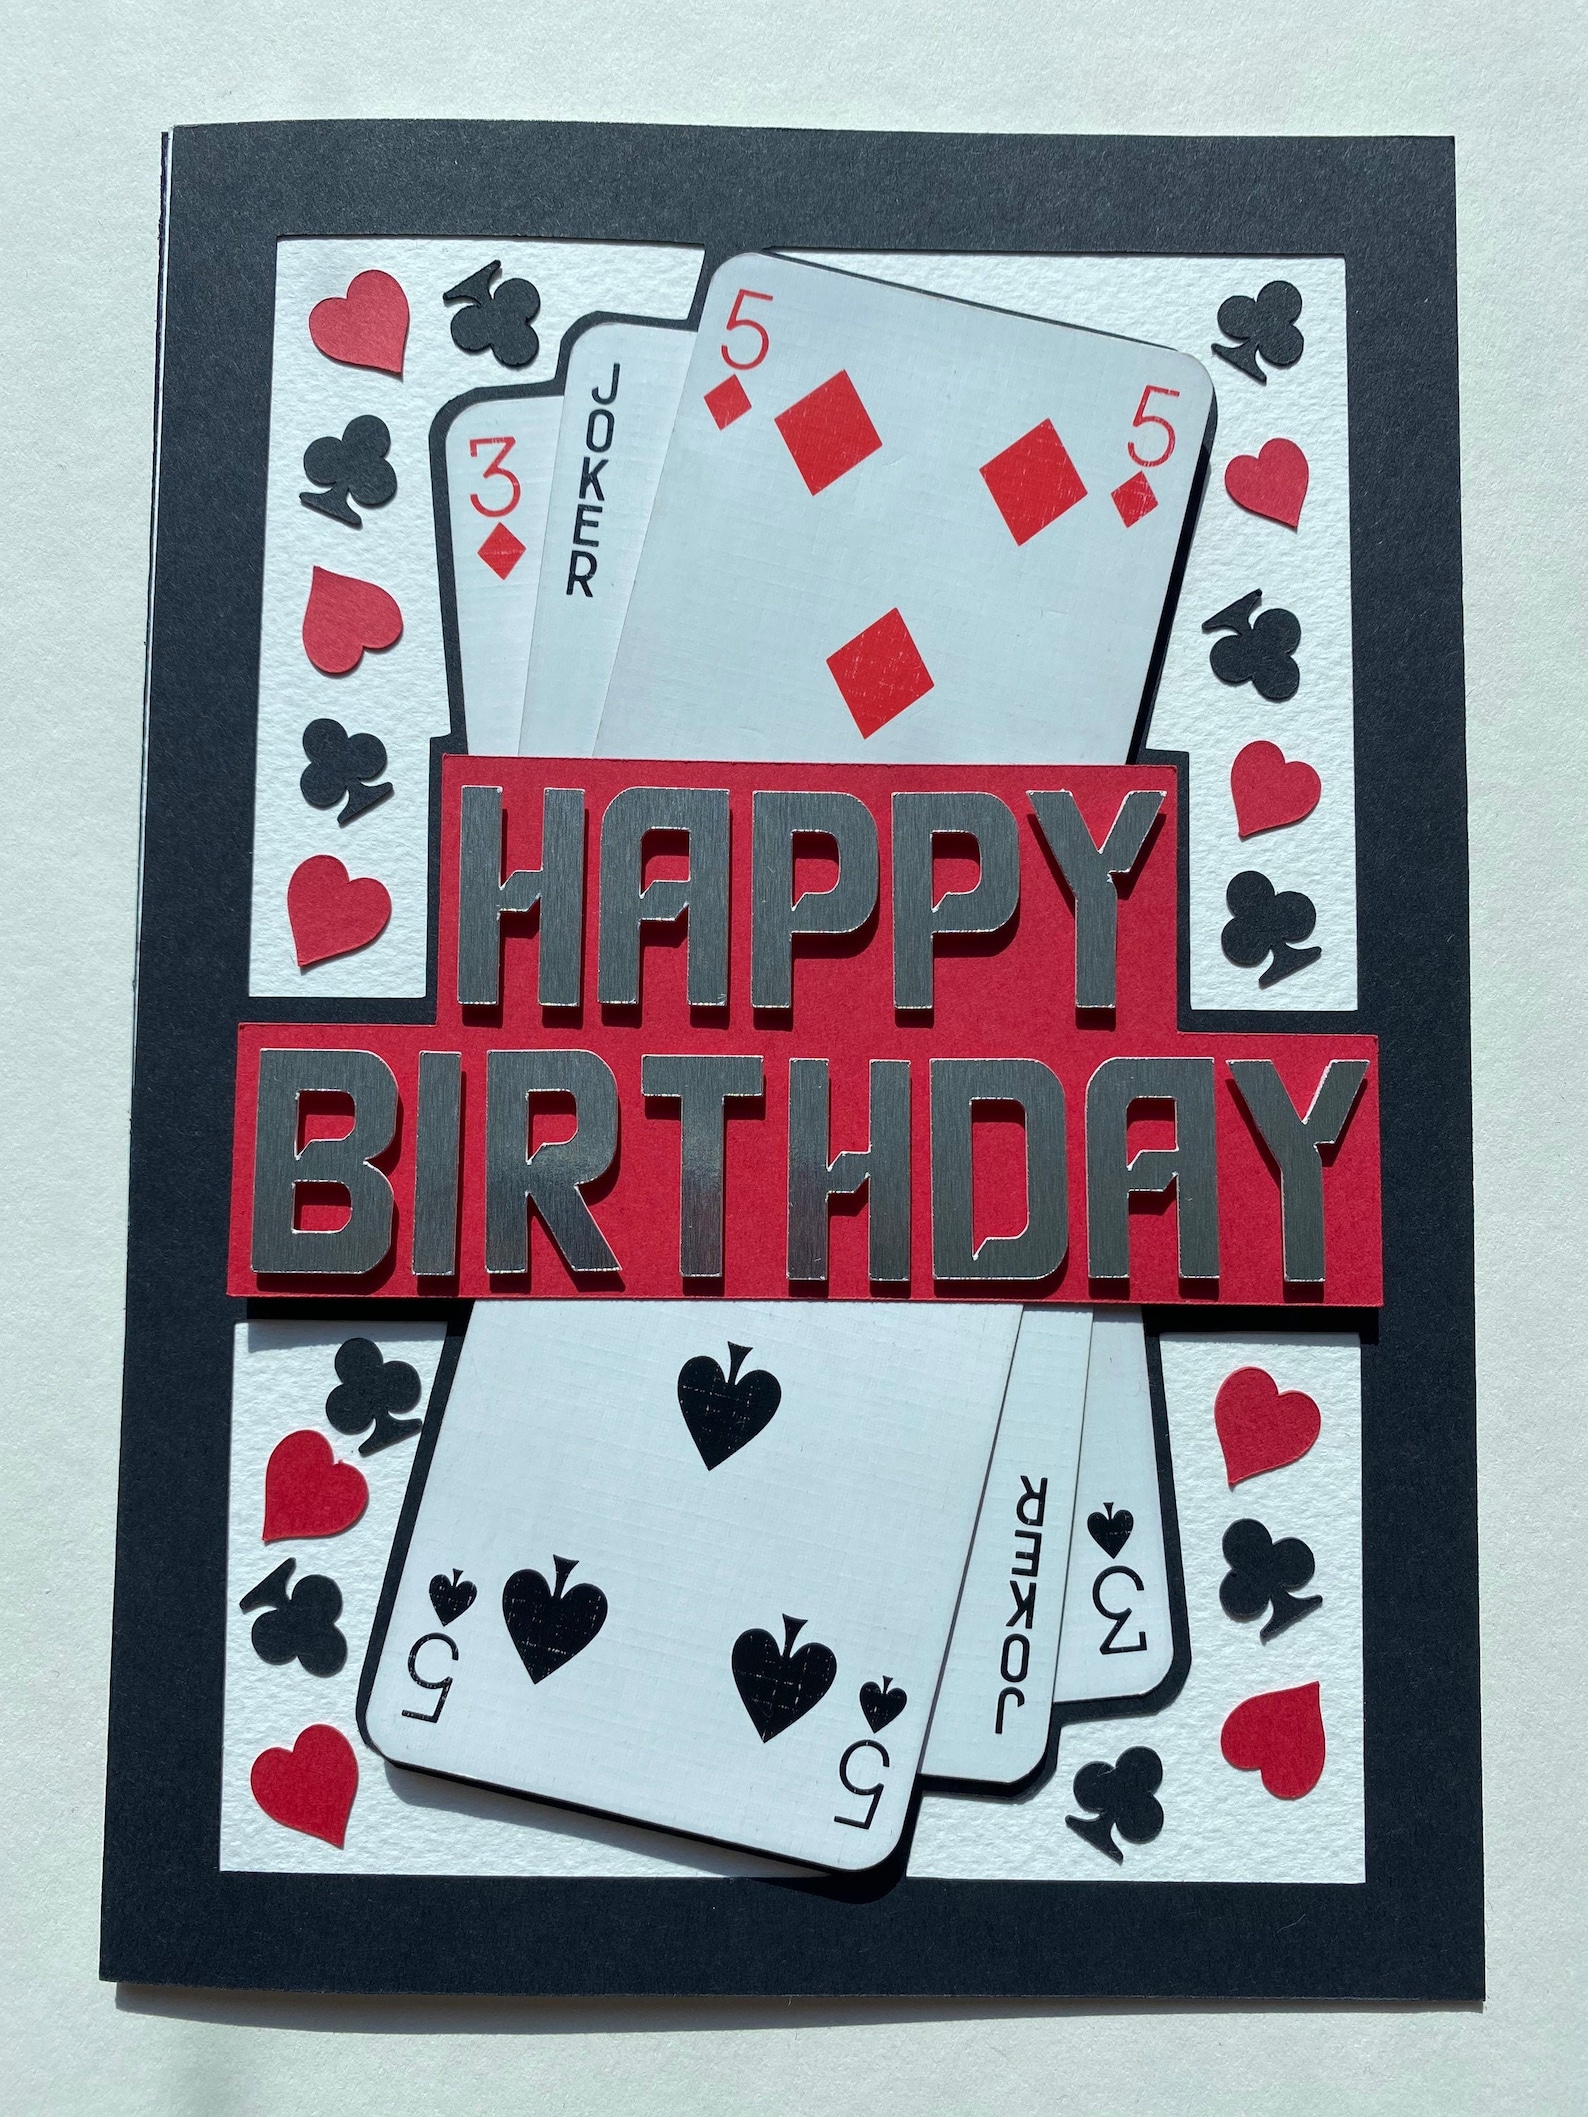 3D Poker Themed Happy Birthday Card | Etsy